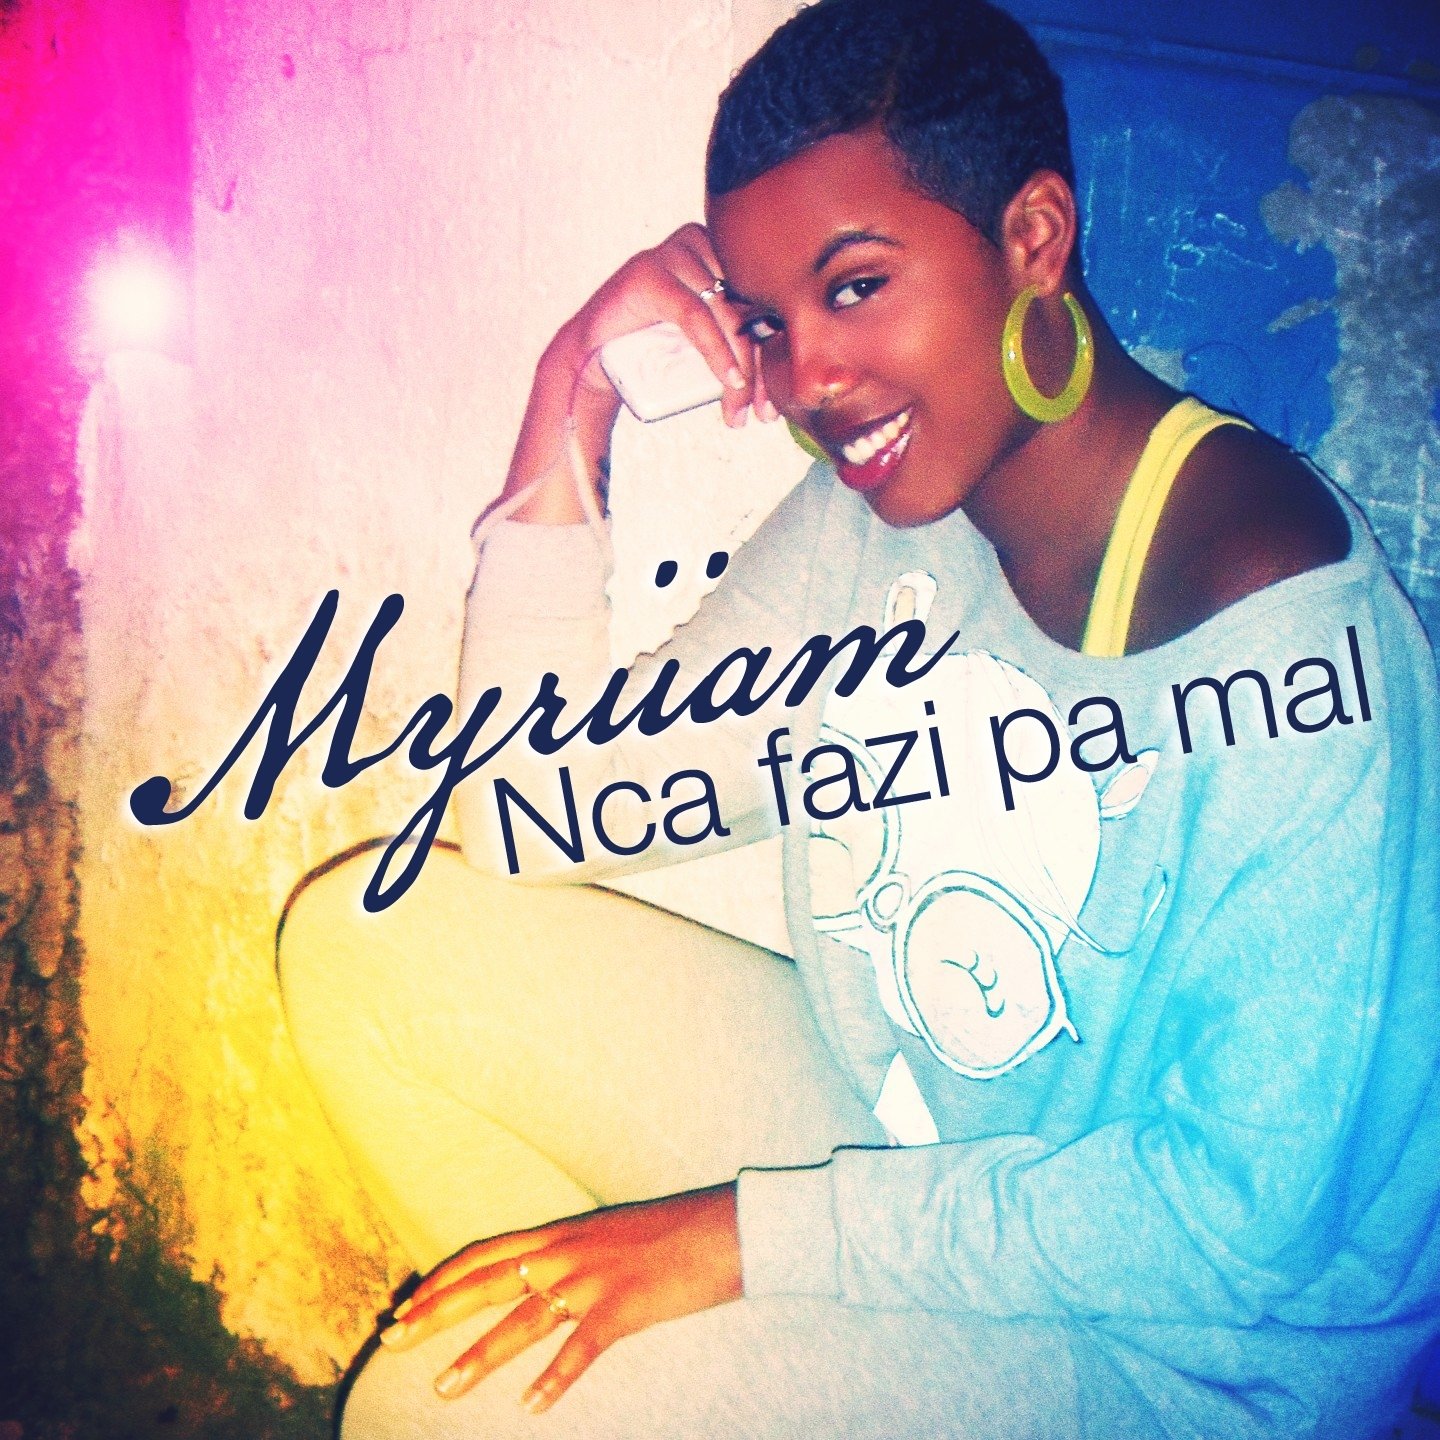 Nca fazi pa mal - Myriiam - Listen and discover